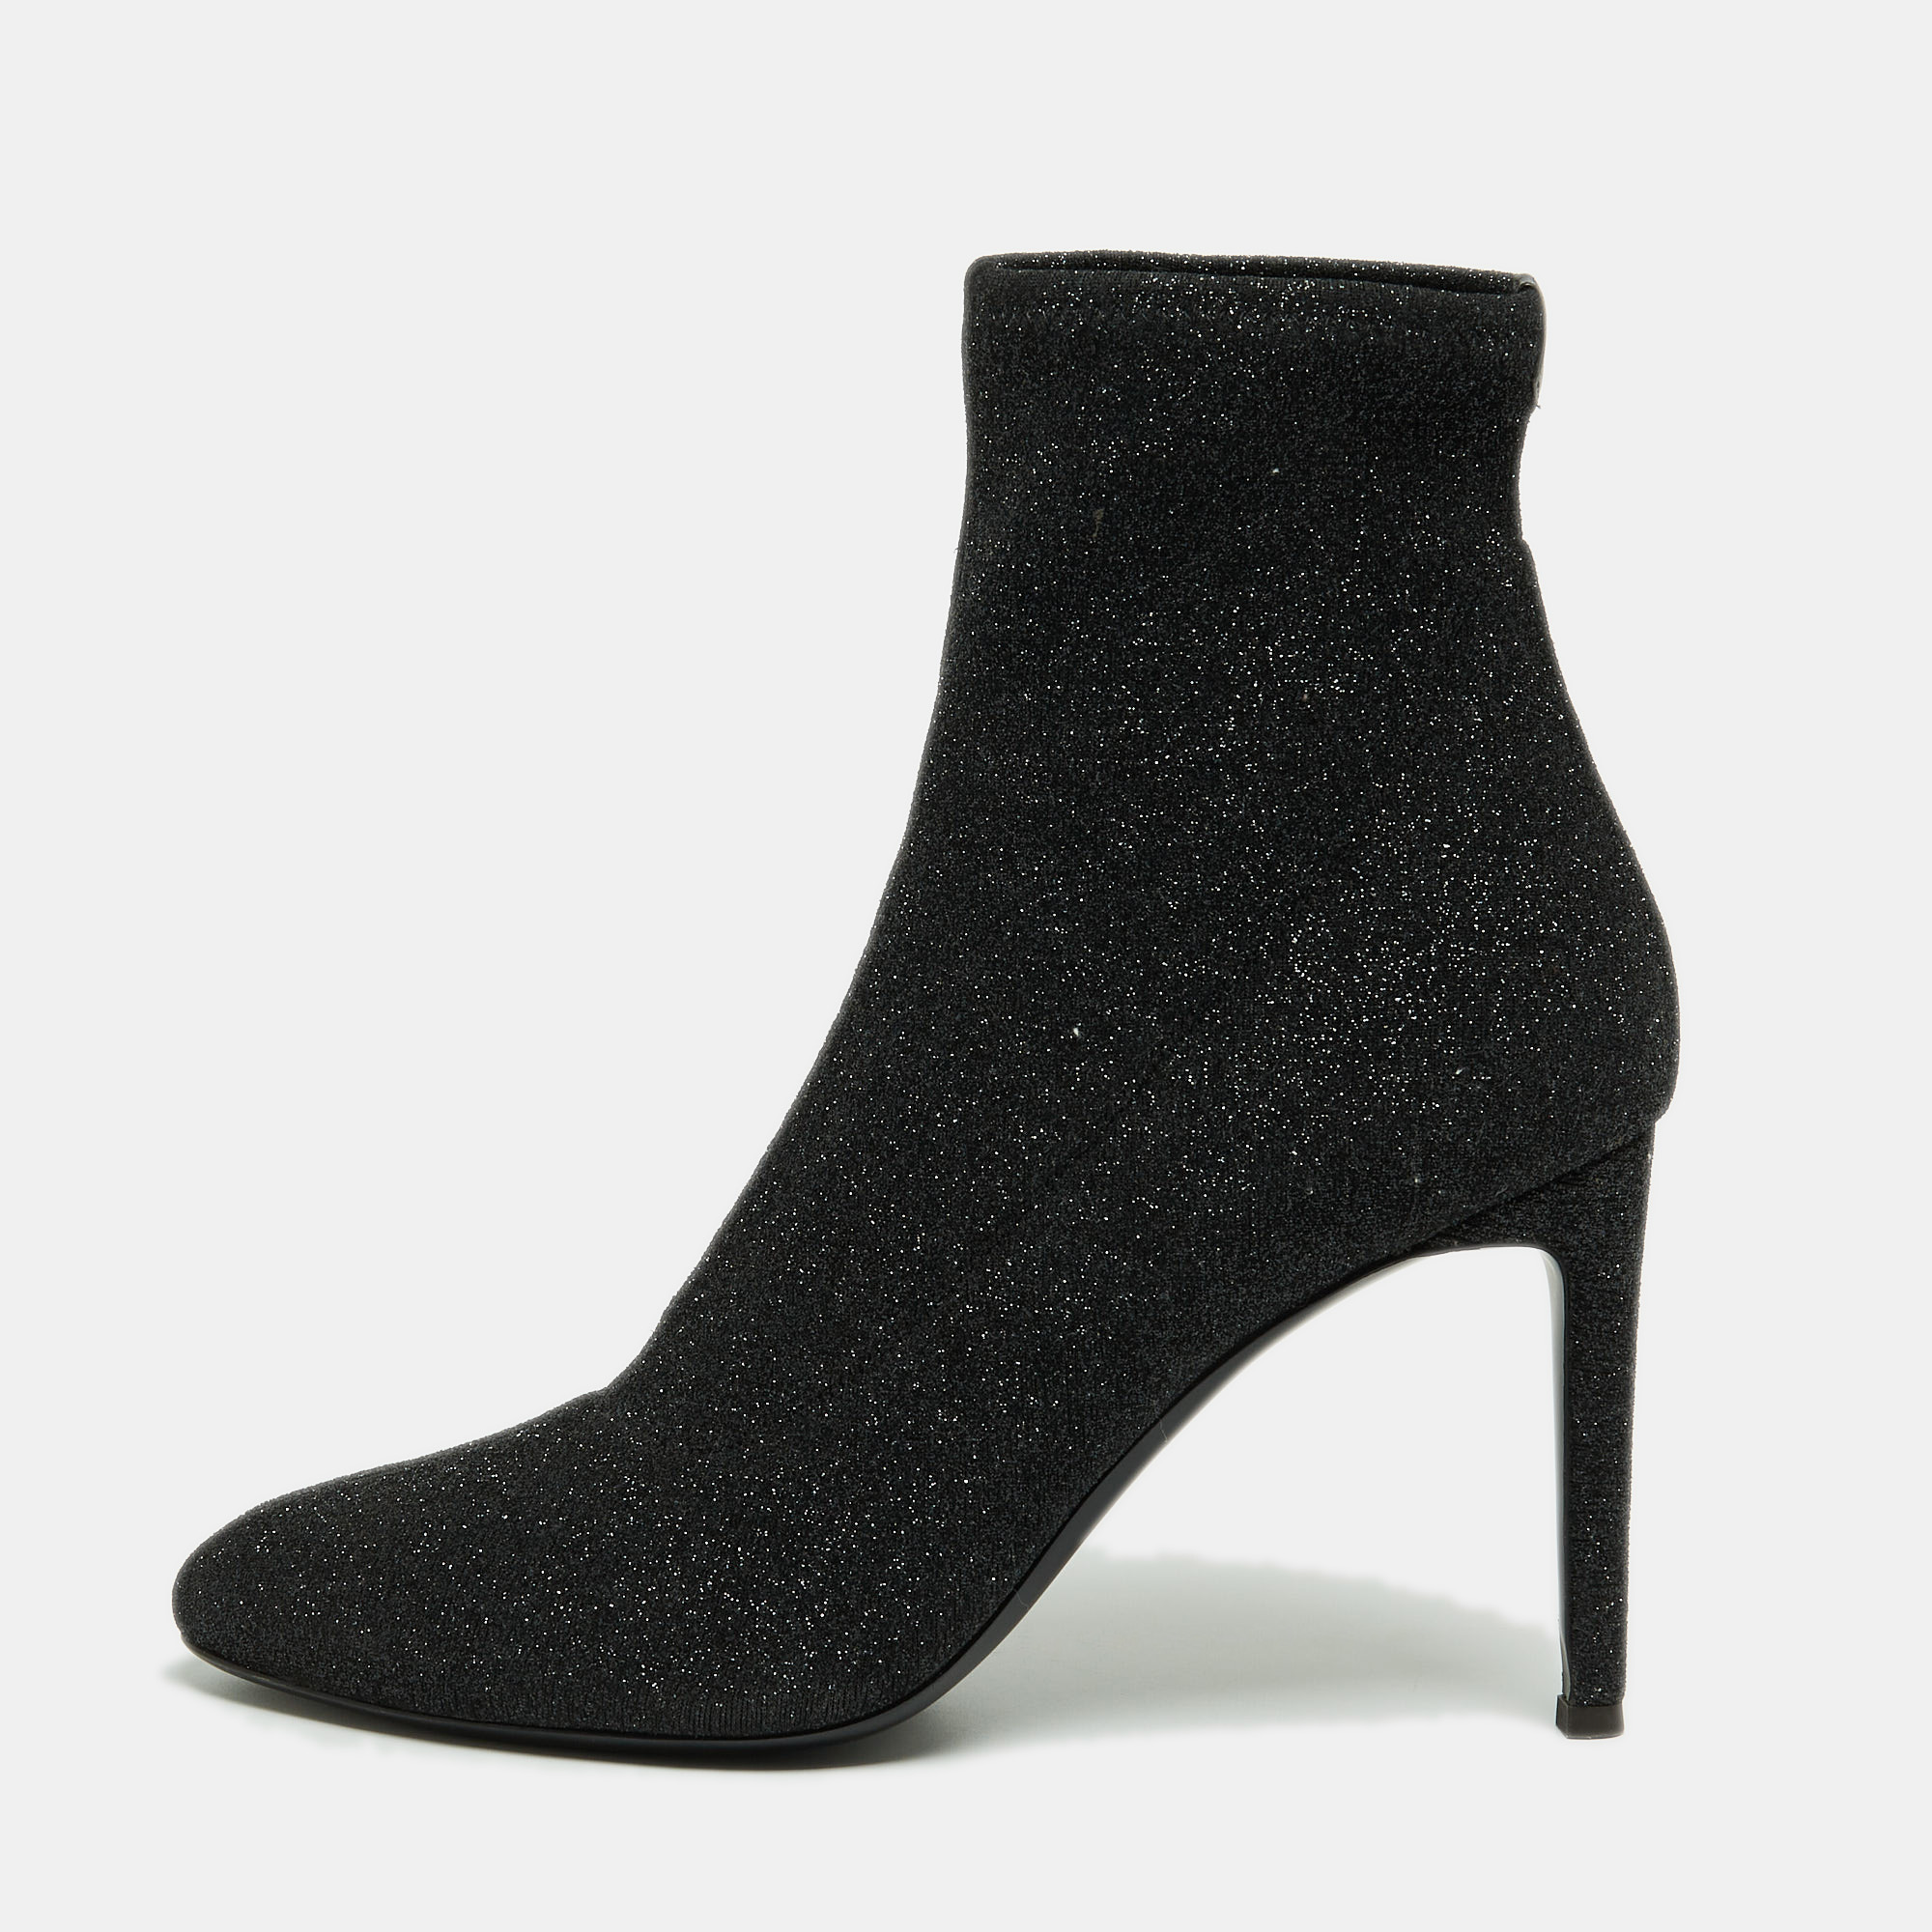 Giuseppe zanotti black glitter fabric ankle boots size 41